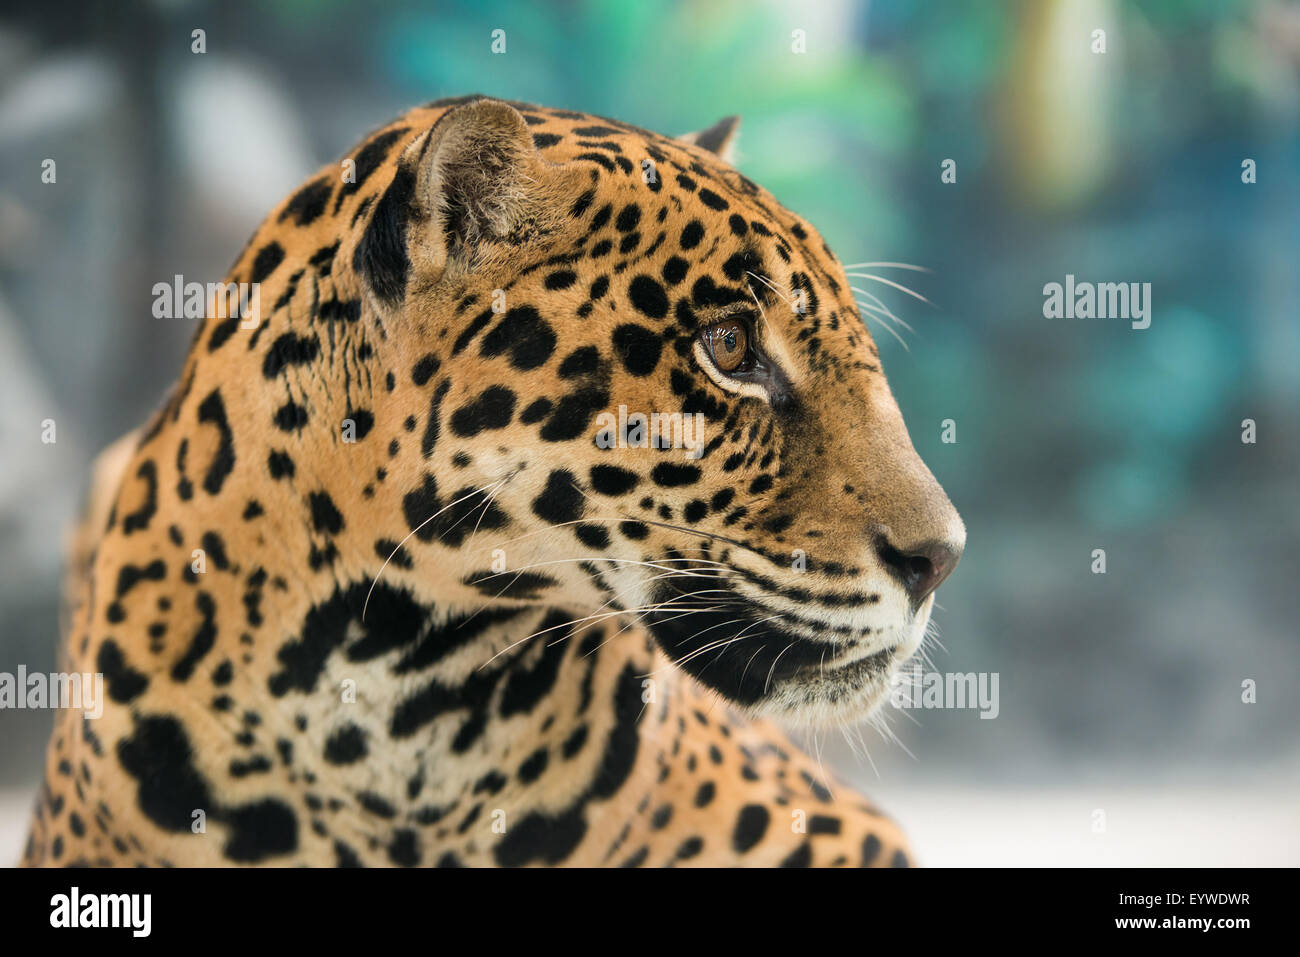 jaguar ( Panthera onca ) in zoo Stock Photo